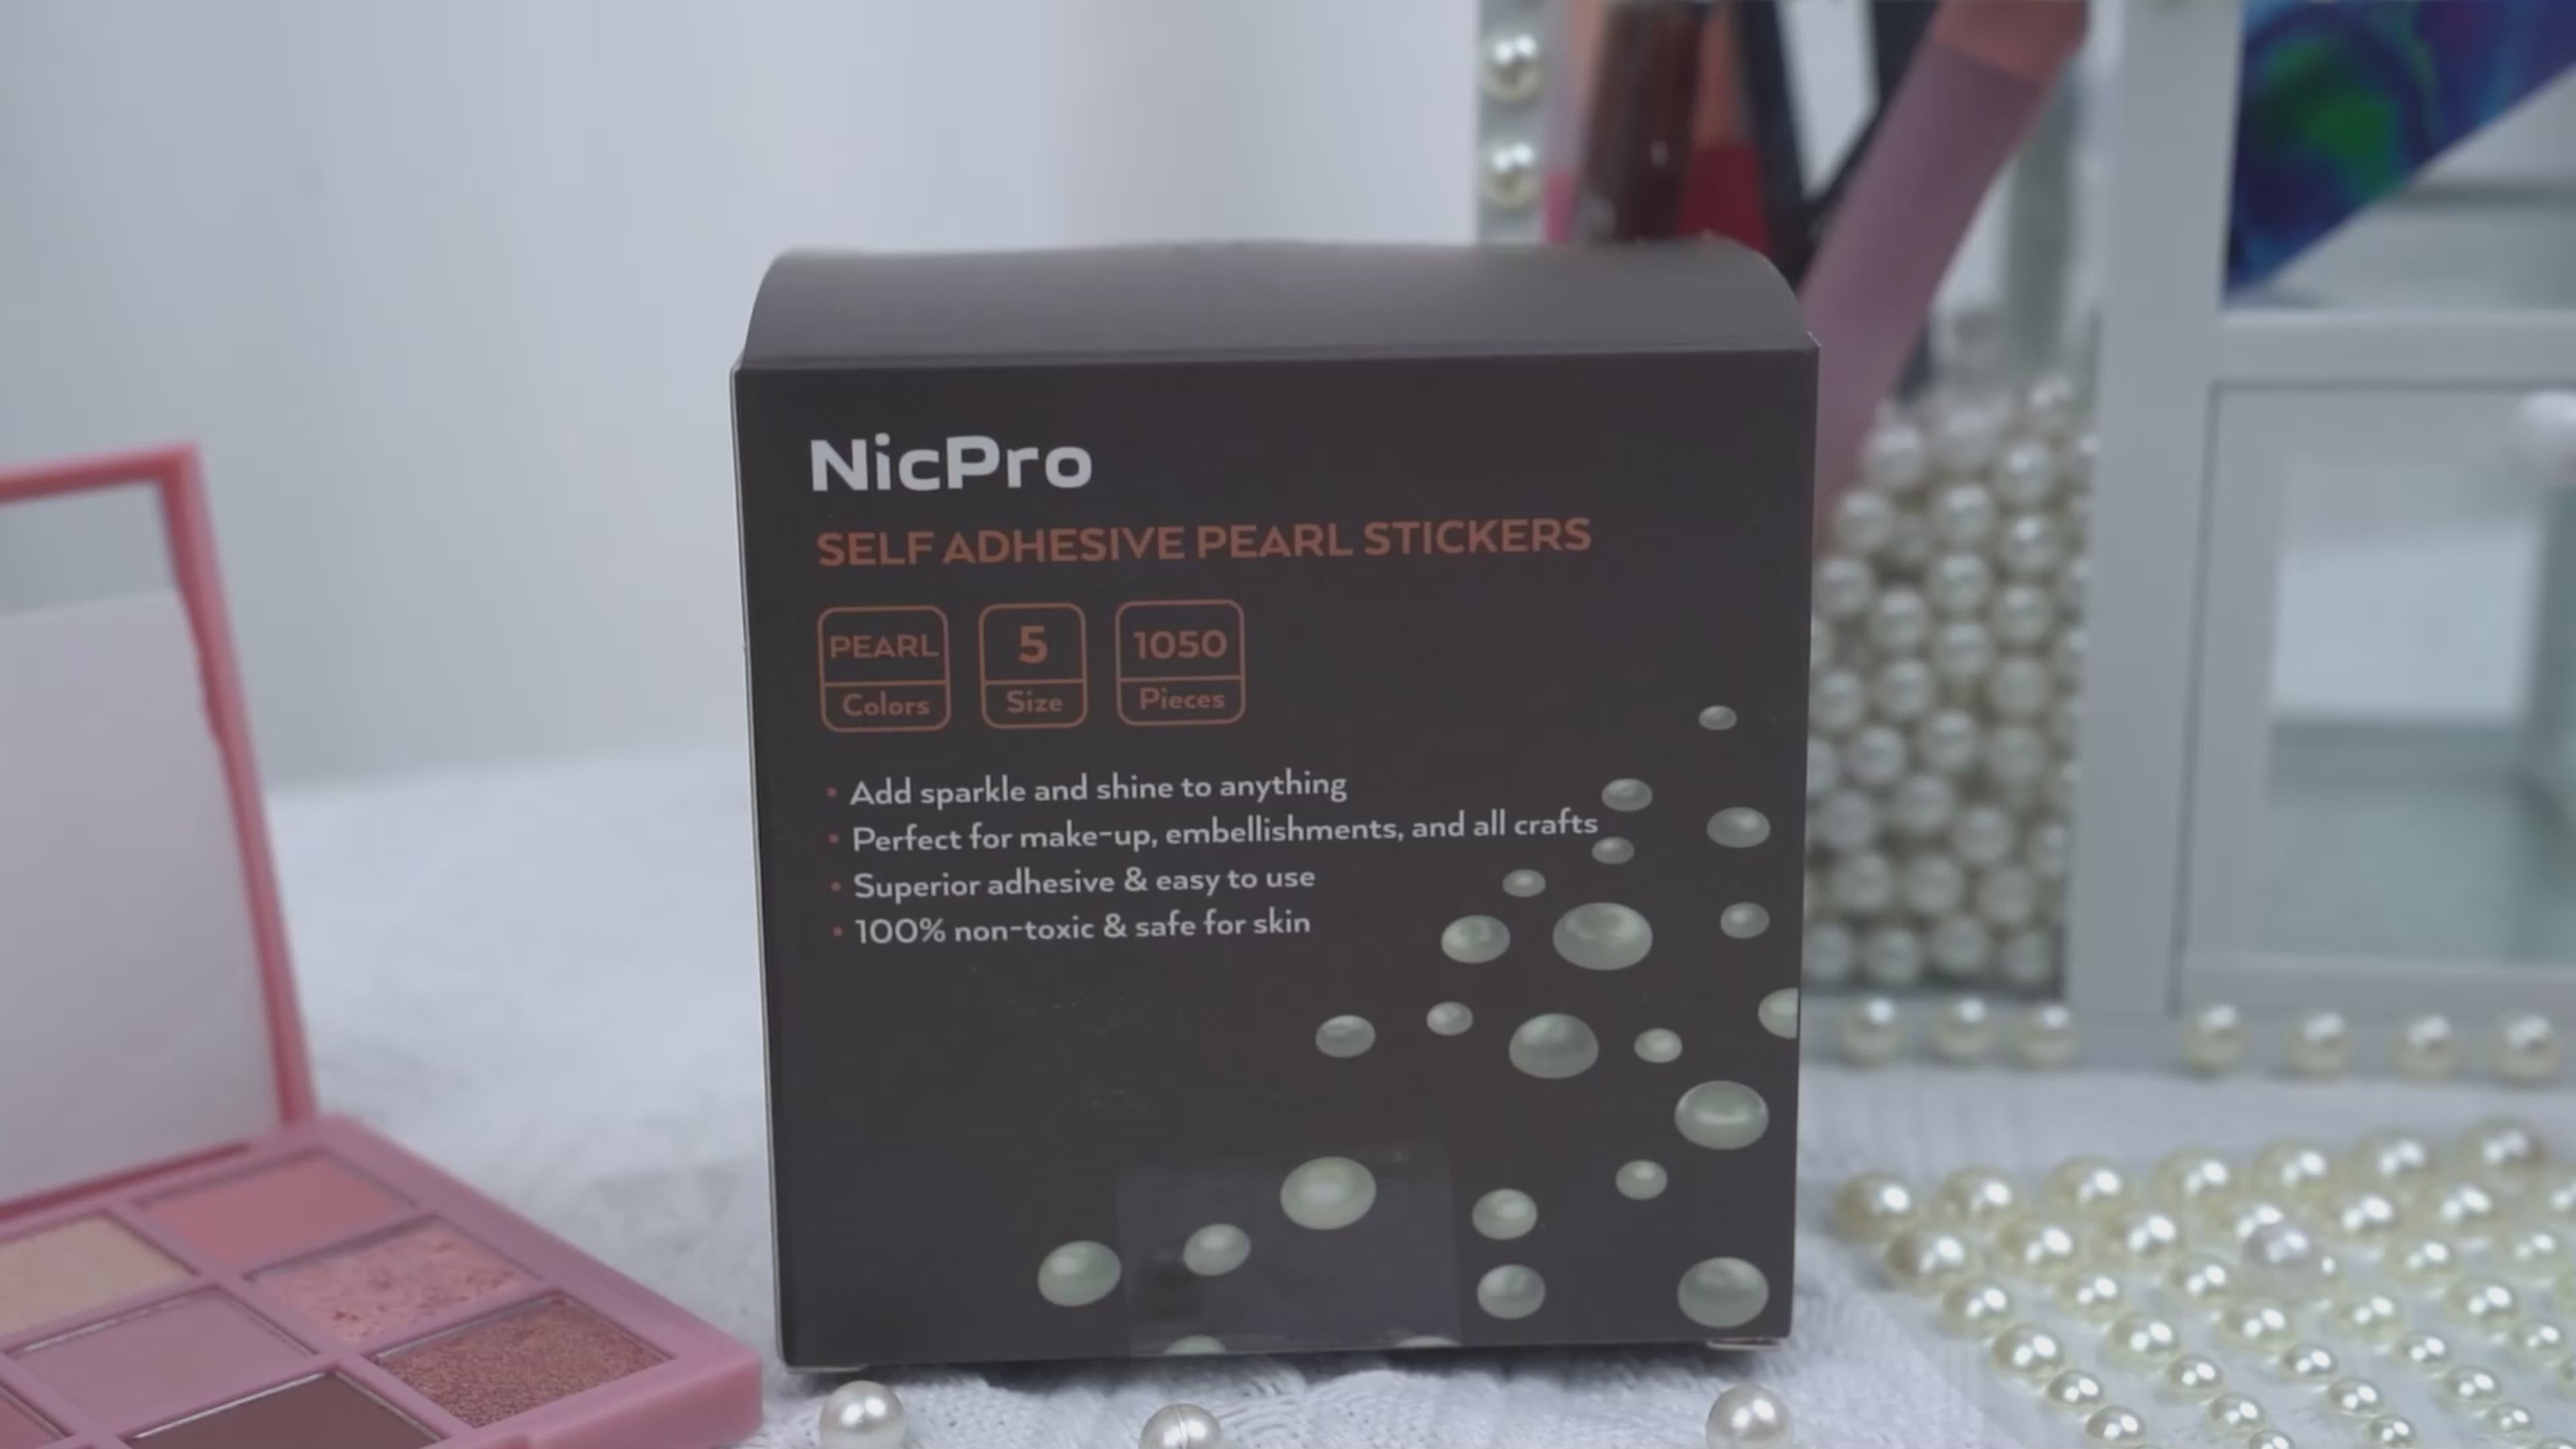 Rhinestone Stickers 4950 PCS, Nicpro Self Adhesive Face Gems Stick on